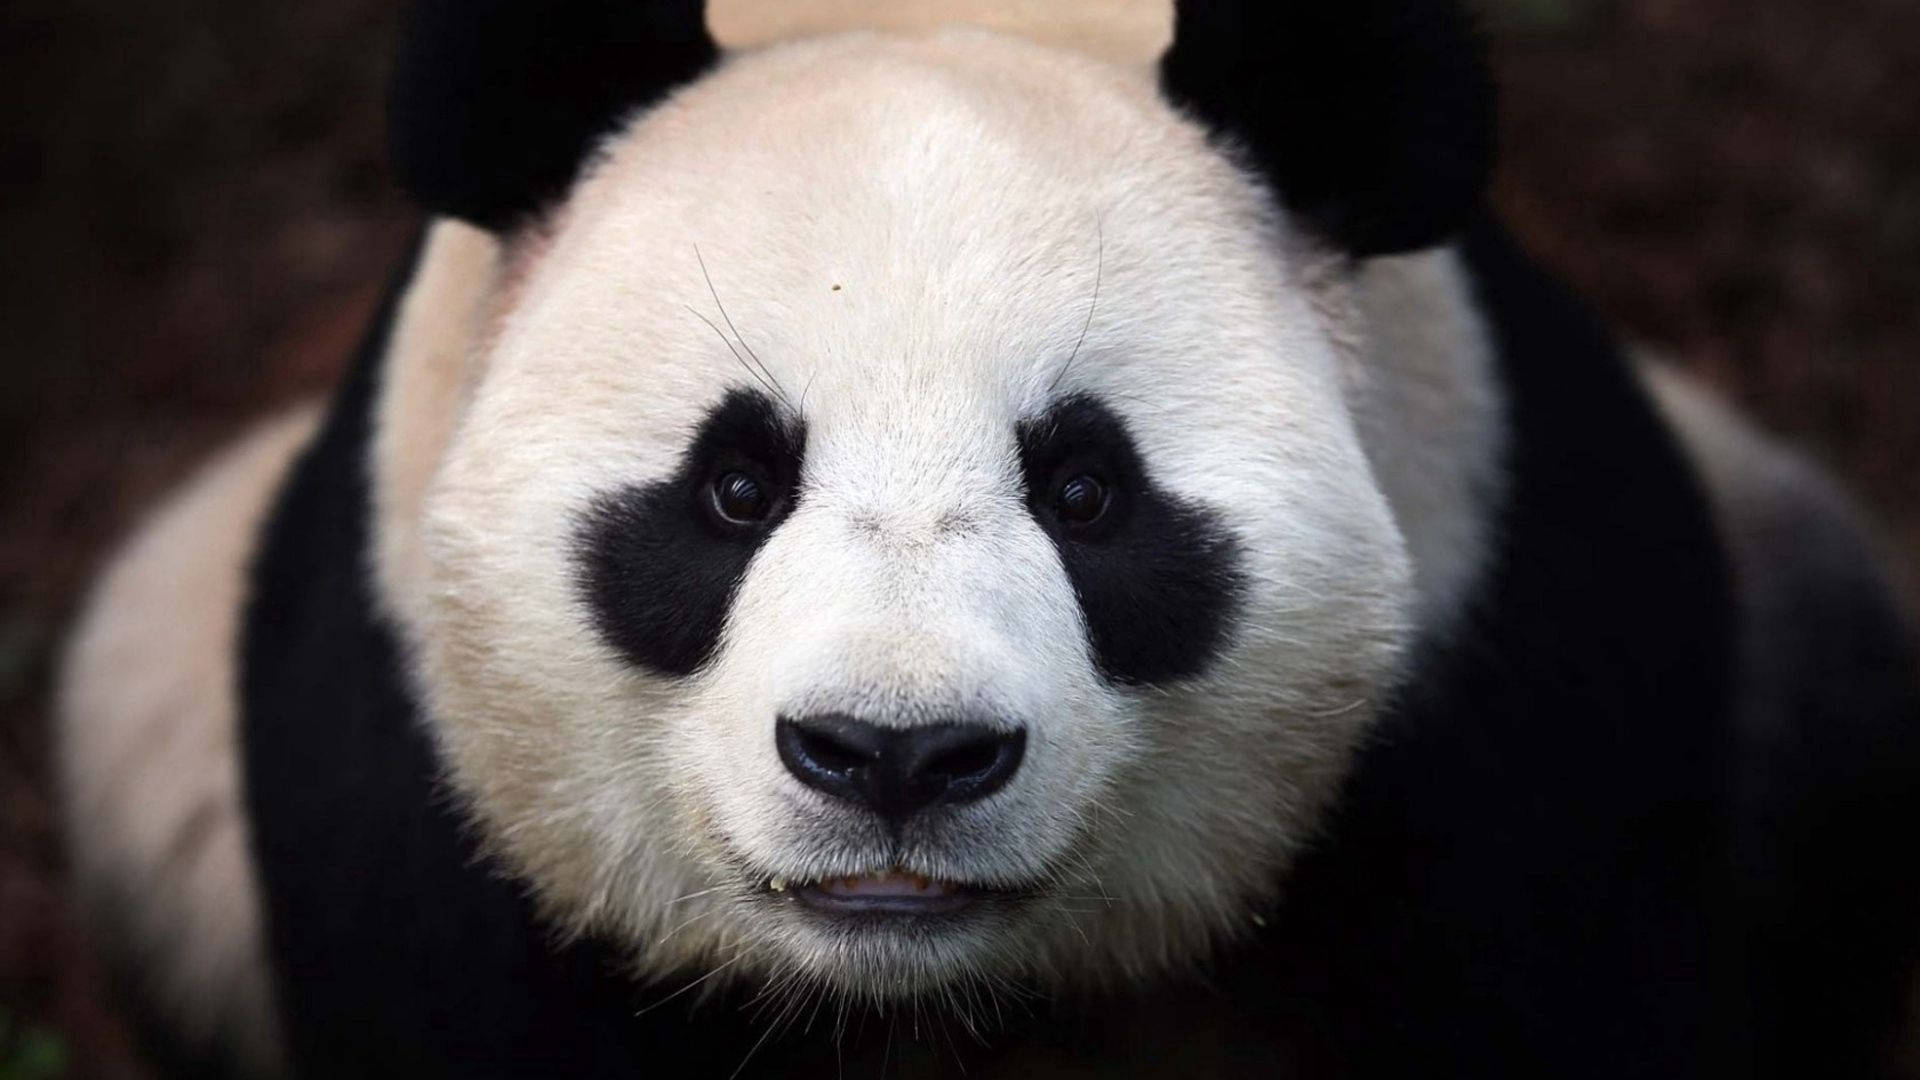 A close up of a furry panda bear. Wallpaper